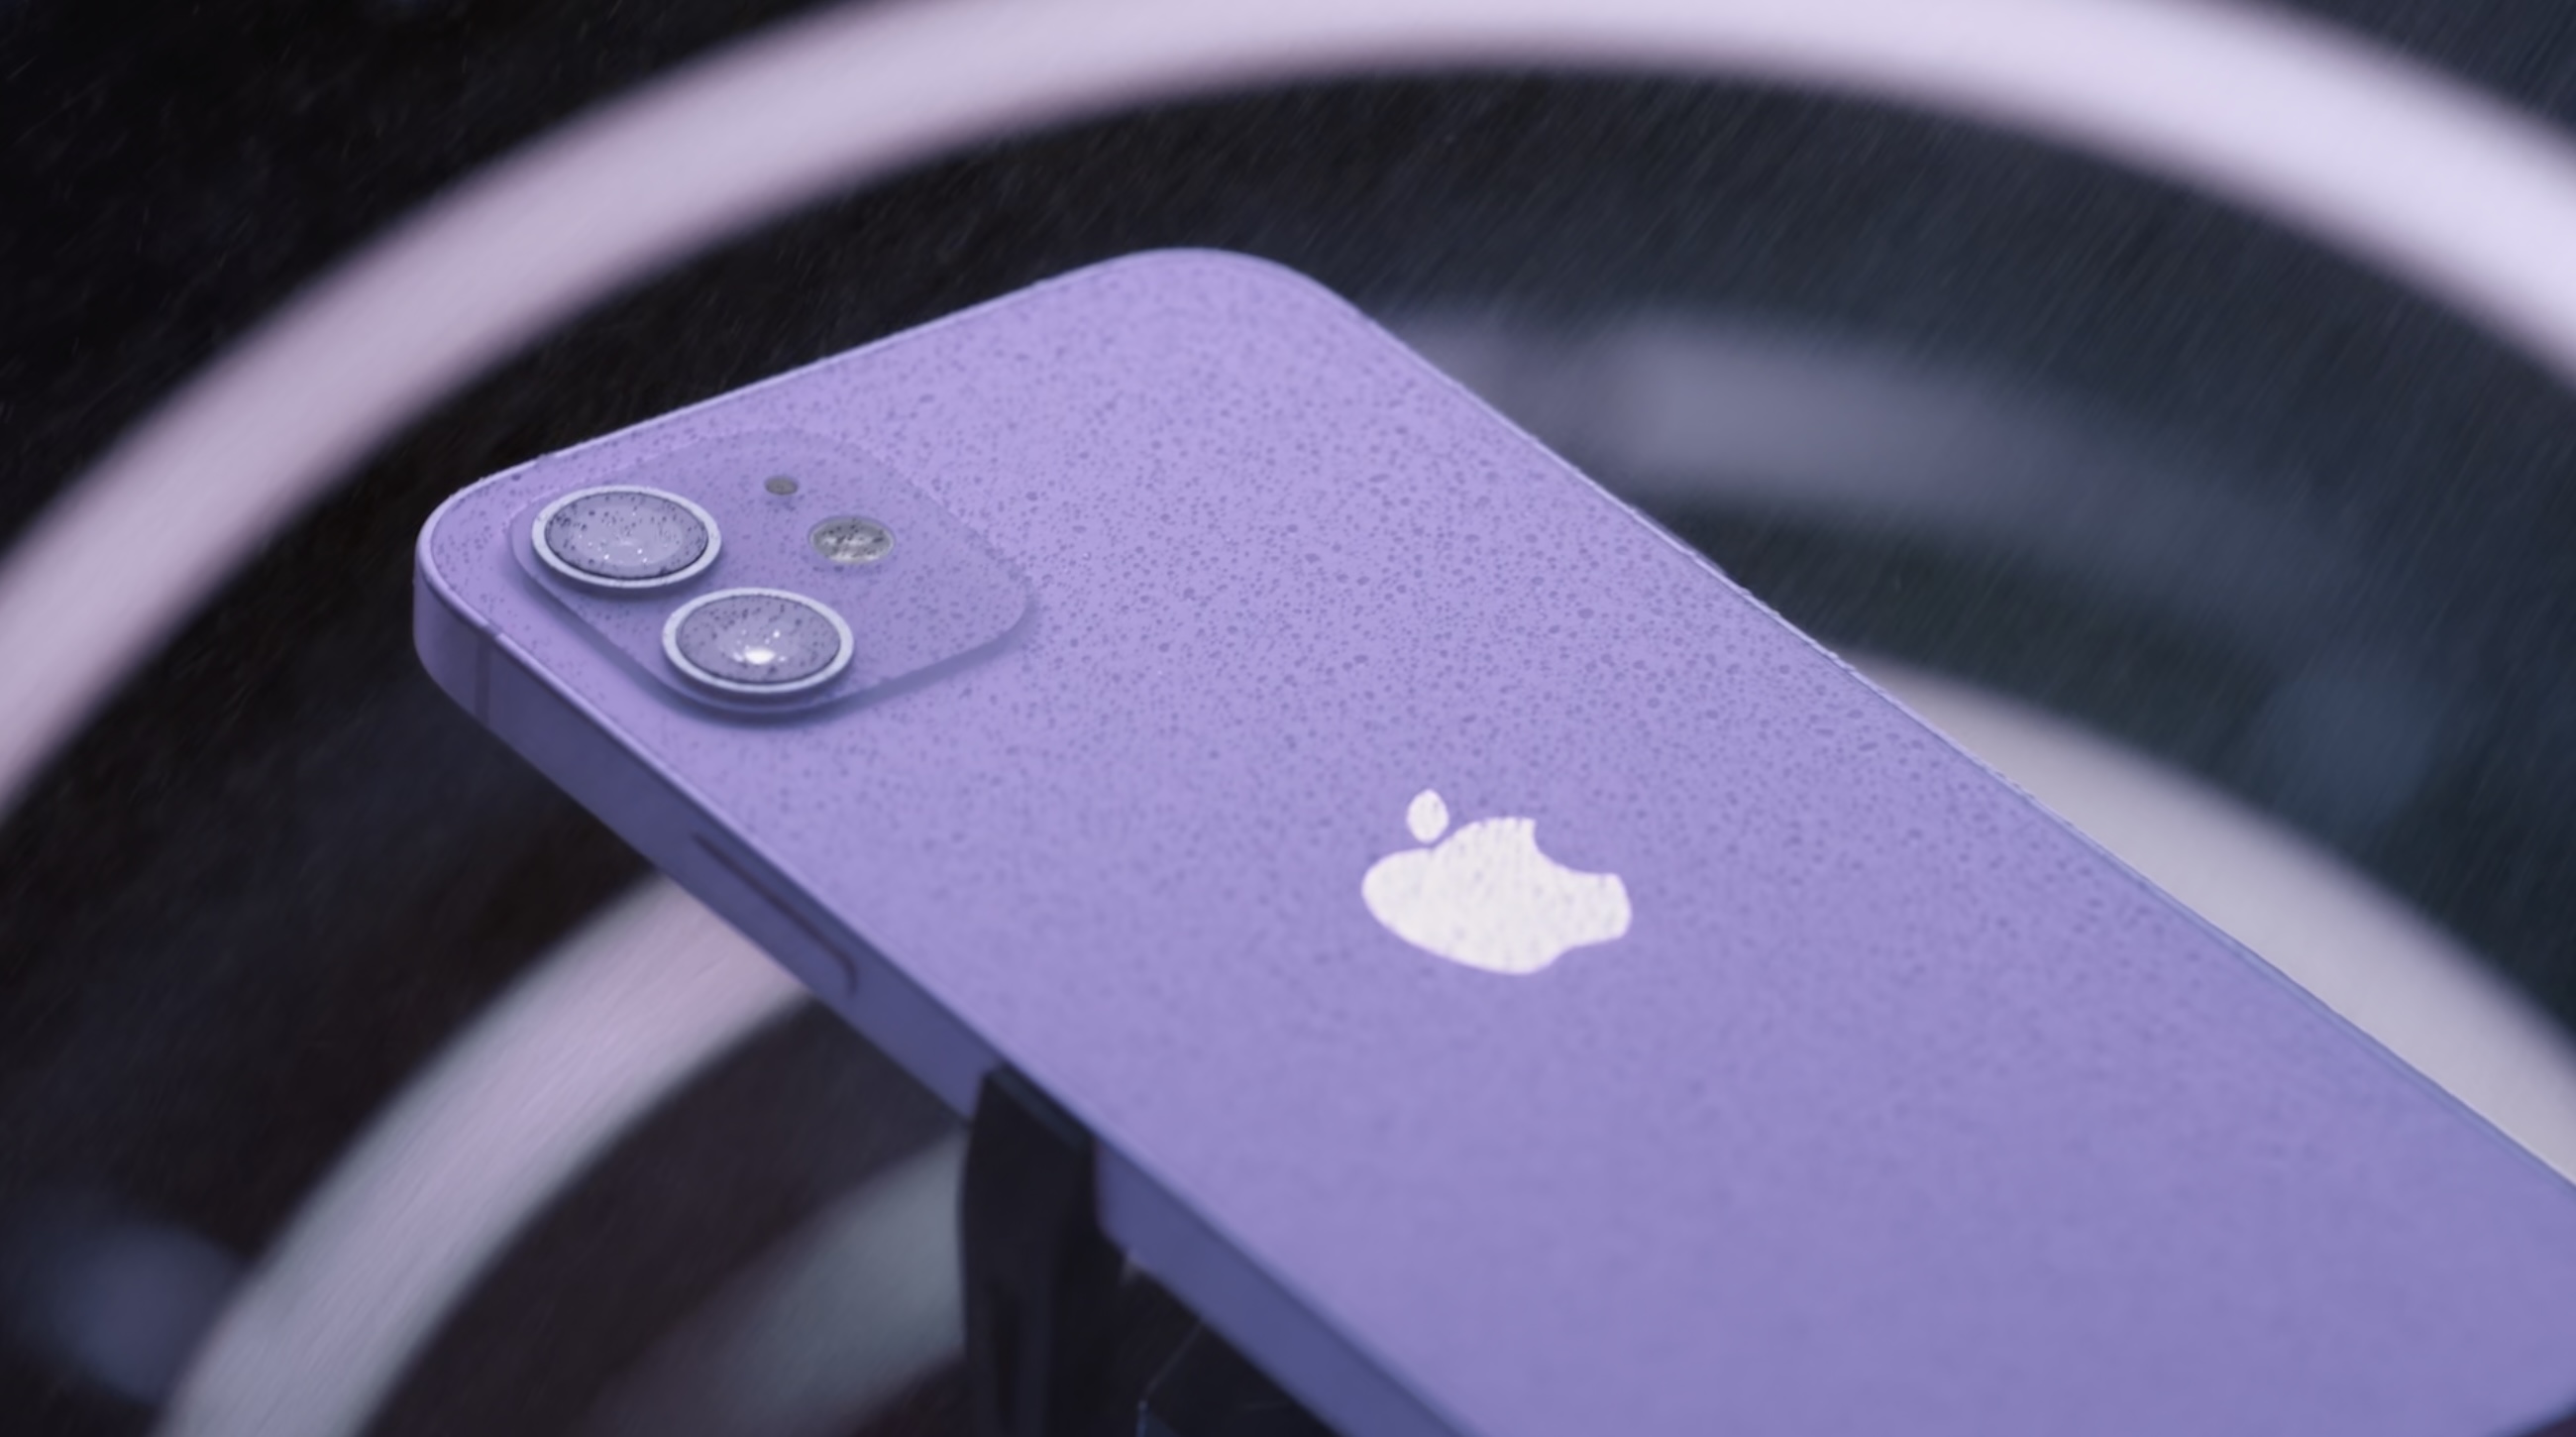 apple purple iphone 12